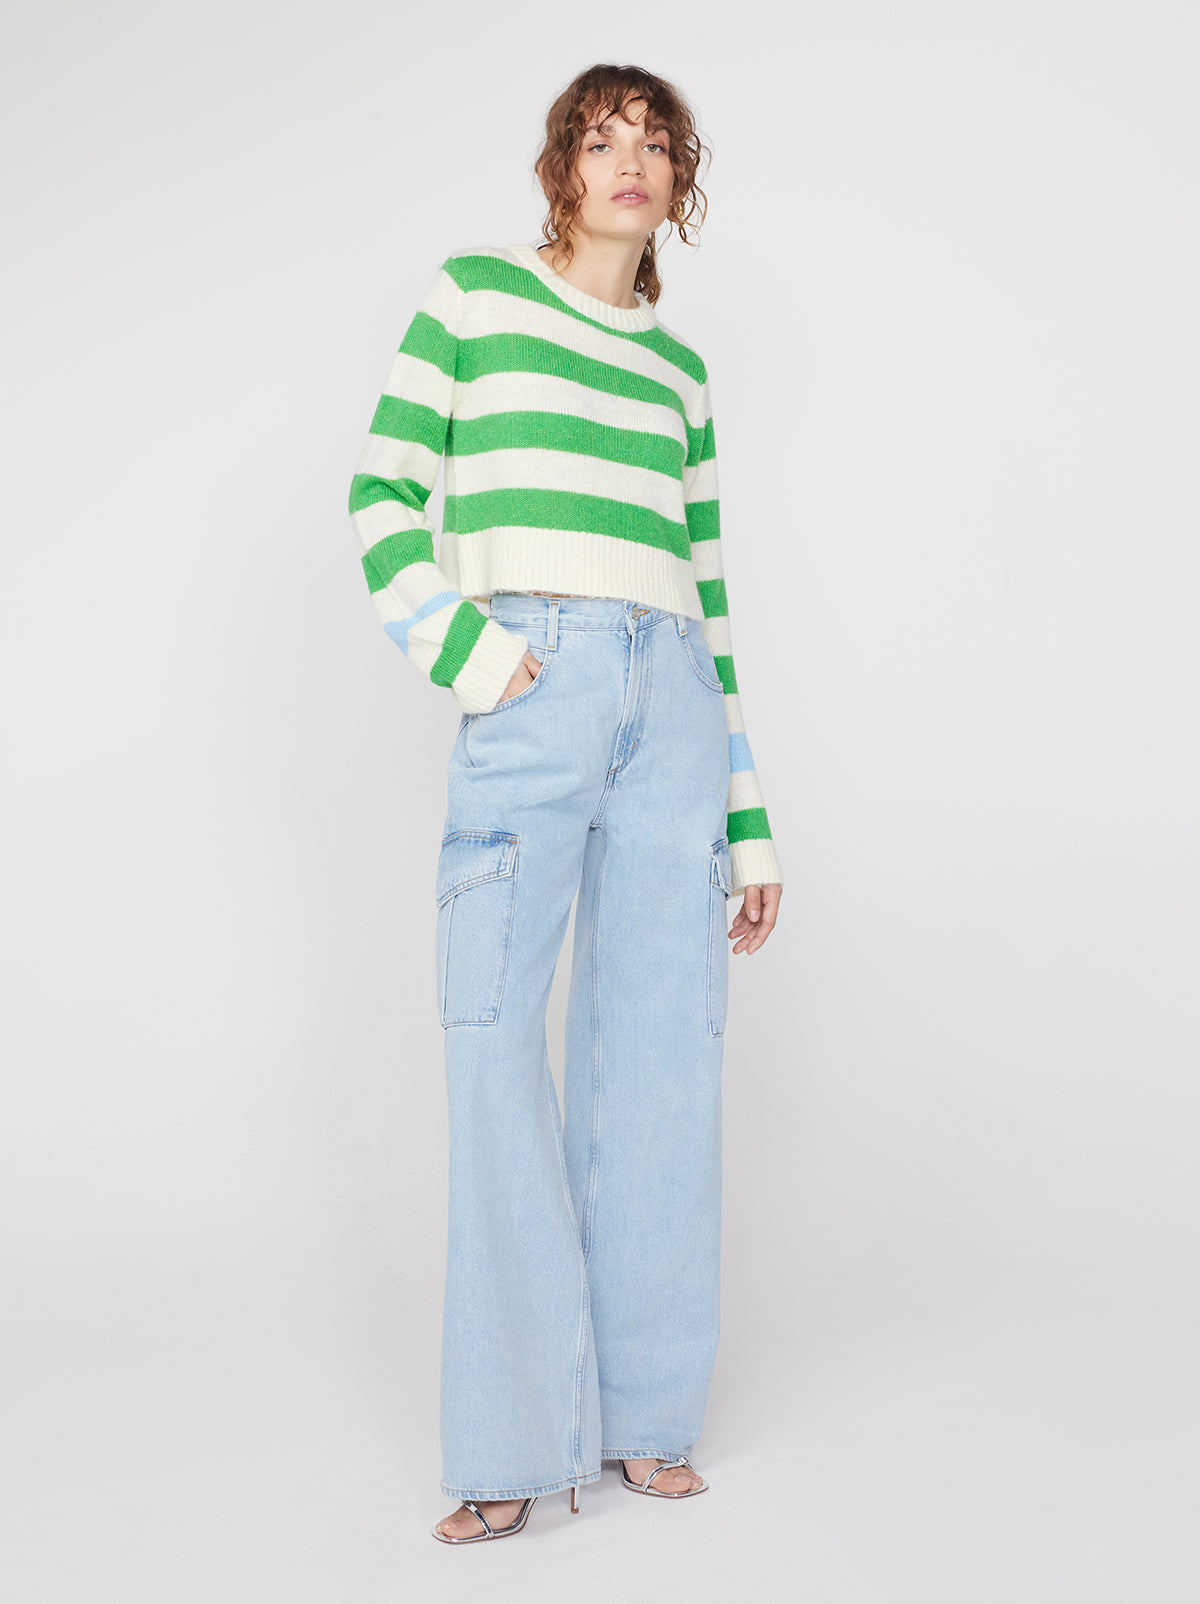 Gillian Green Stripe Intarsia Sweater By KITRI Studio